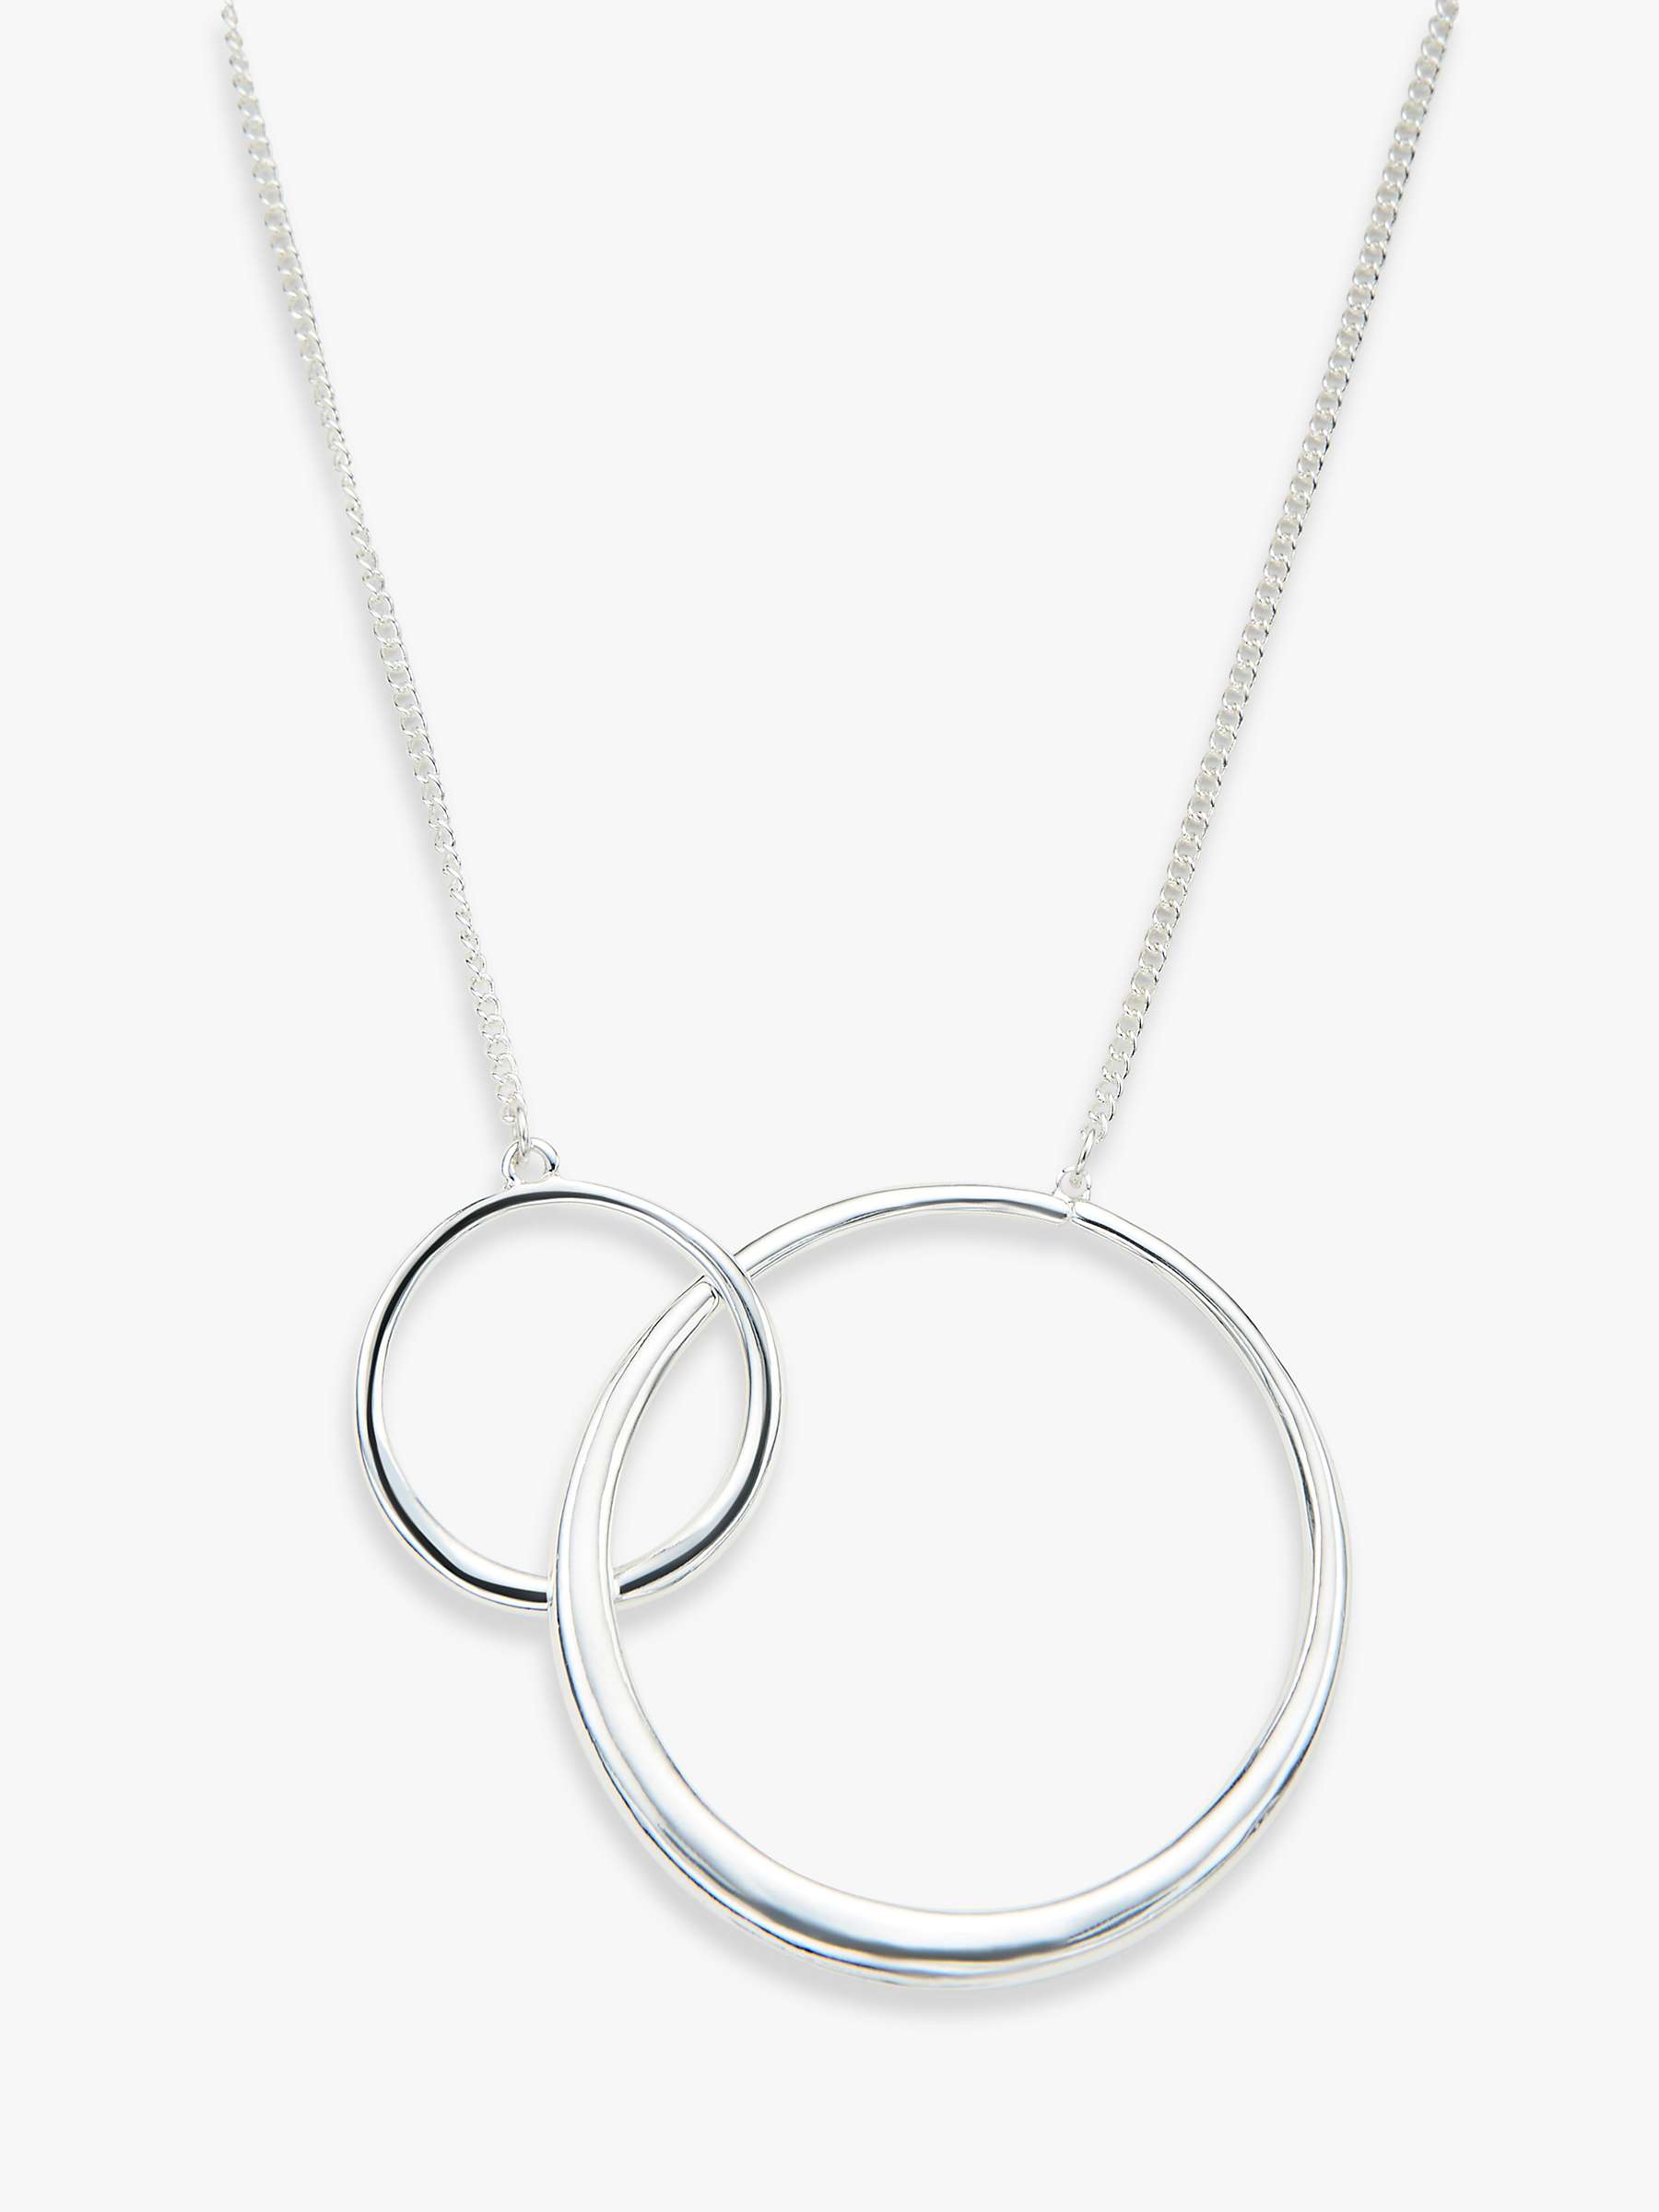 Buy John Lewis Double Circle Linked Pendant Necklace Online at johnlewis.com